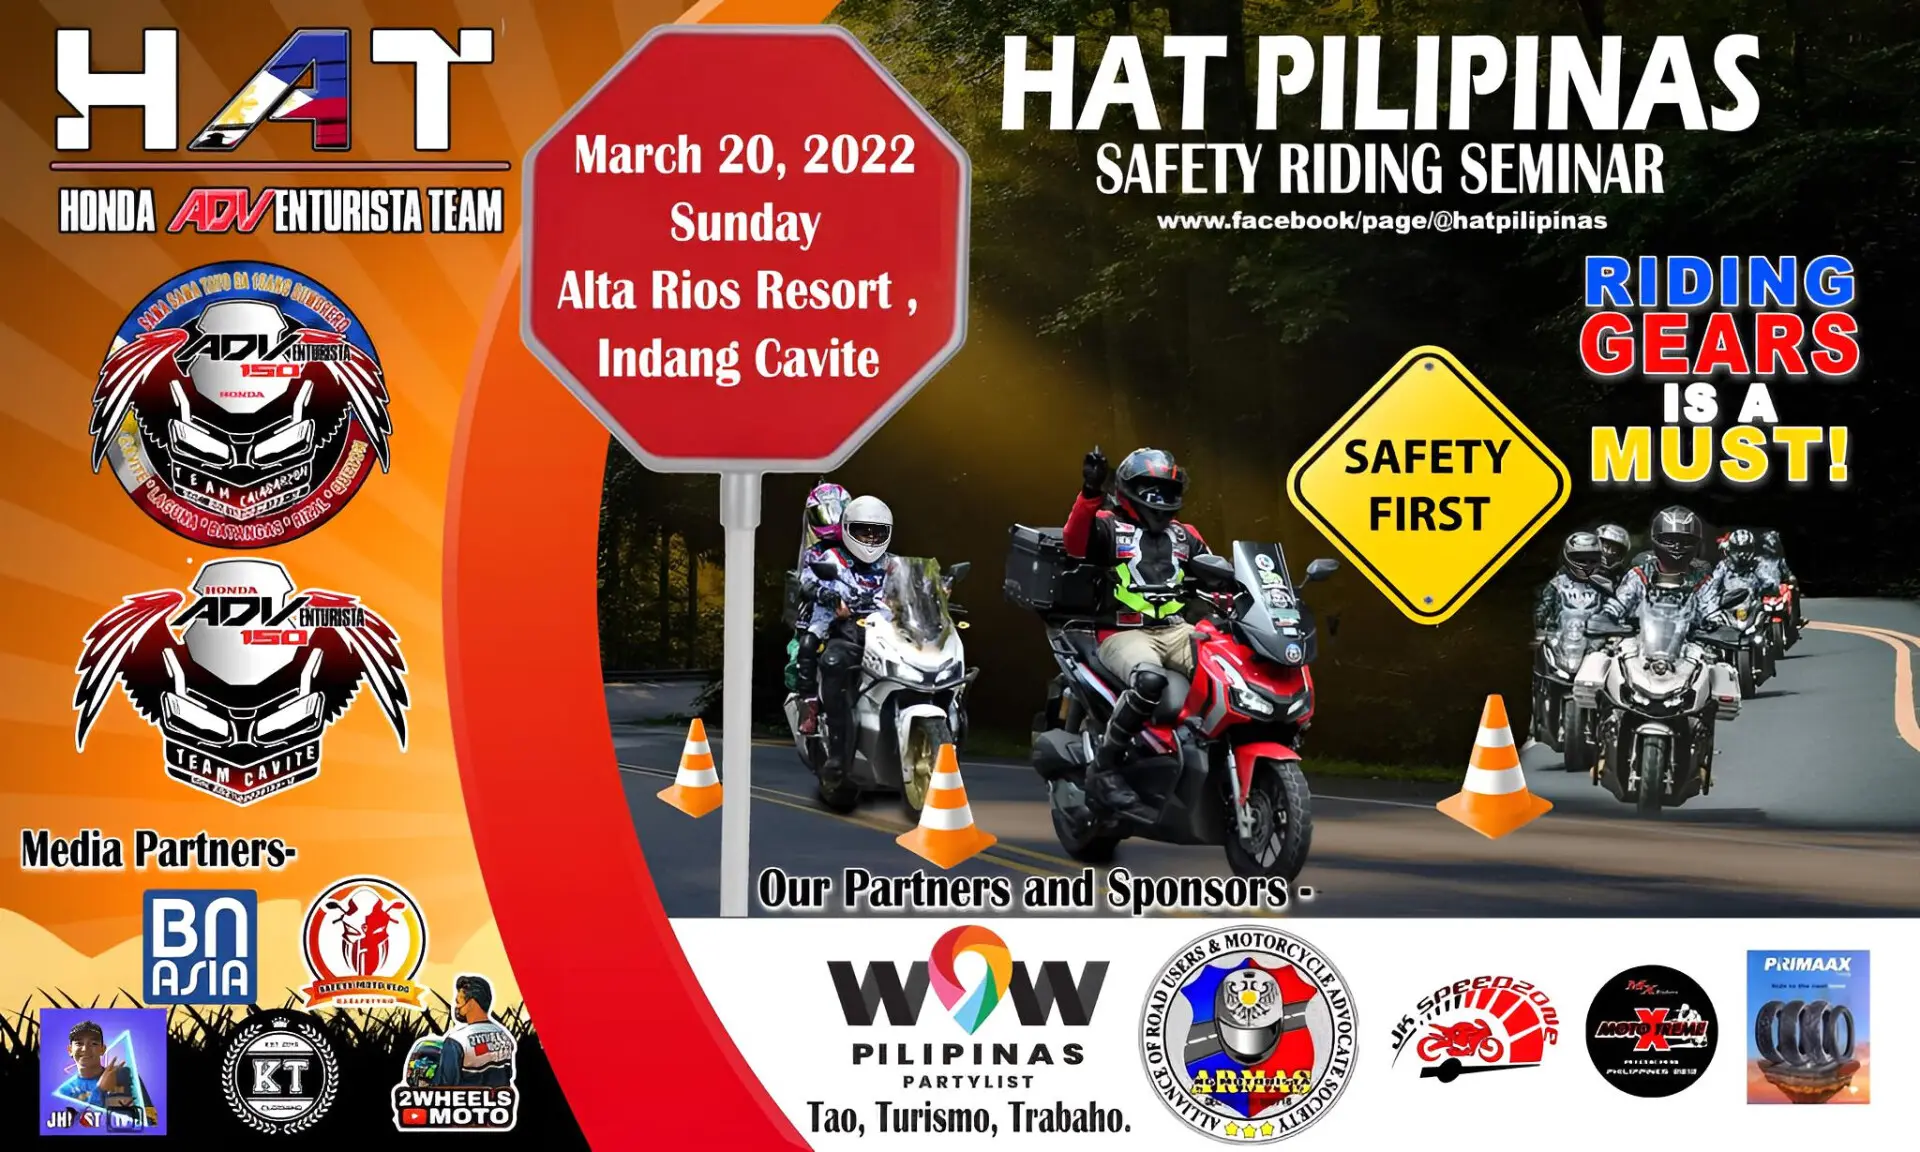 Honda ADVenturista Team's Recent Safety Riding Seminar